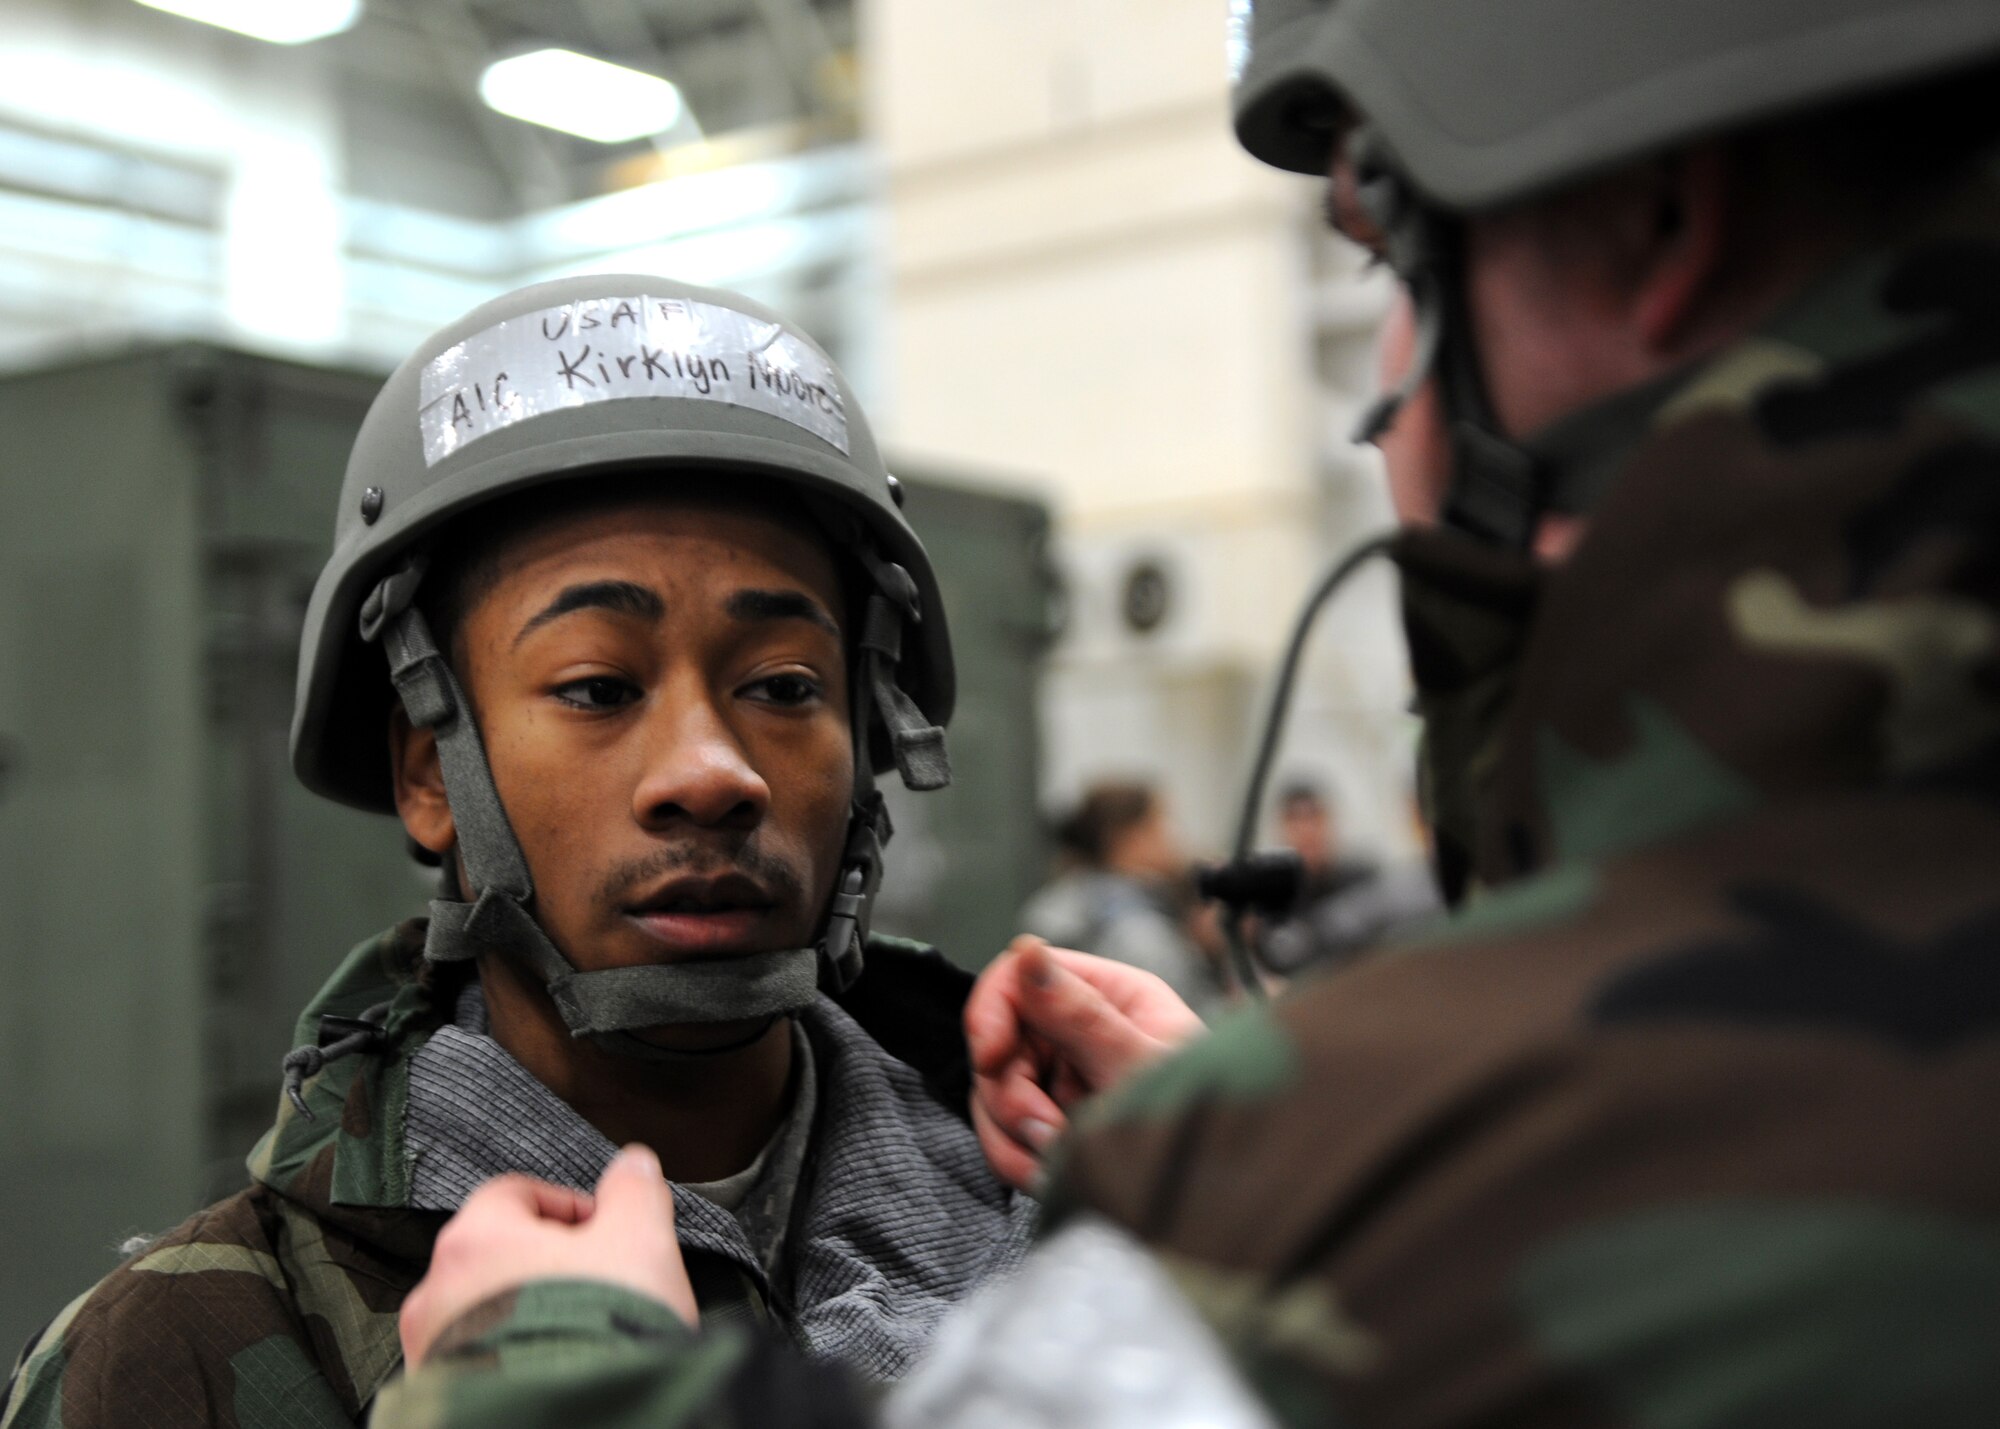 A male assists a male adjust a grey helmet.